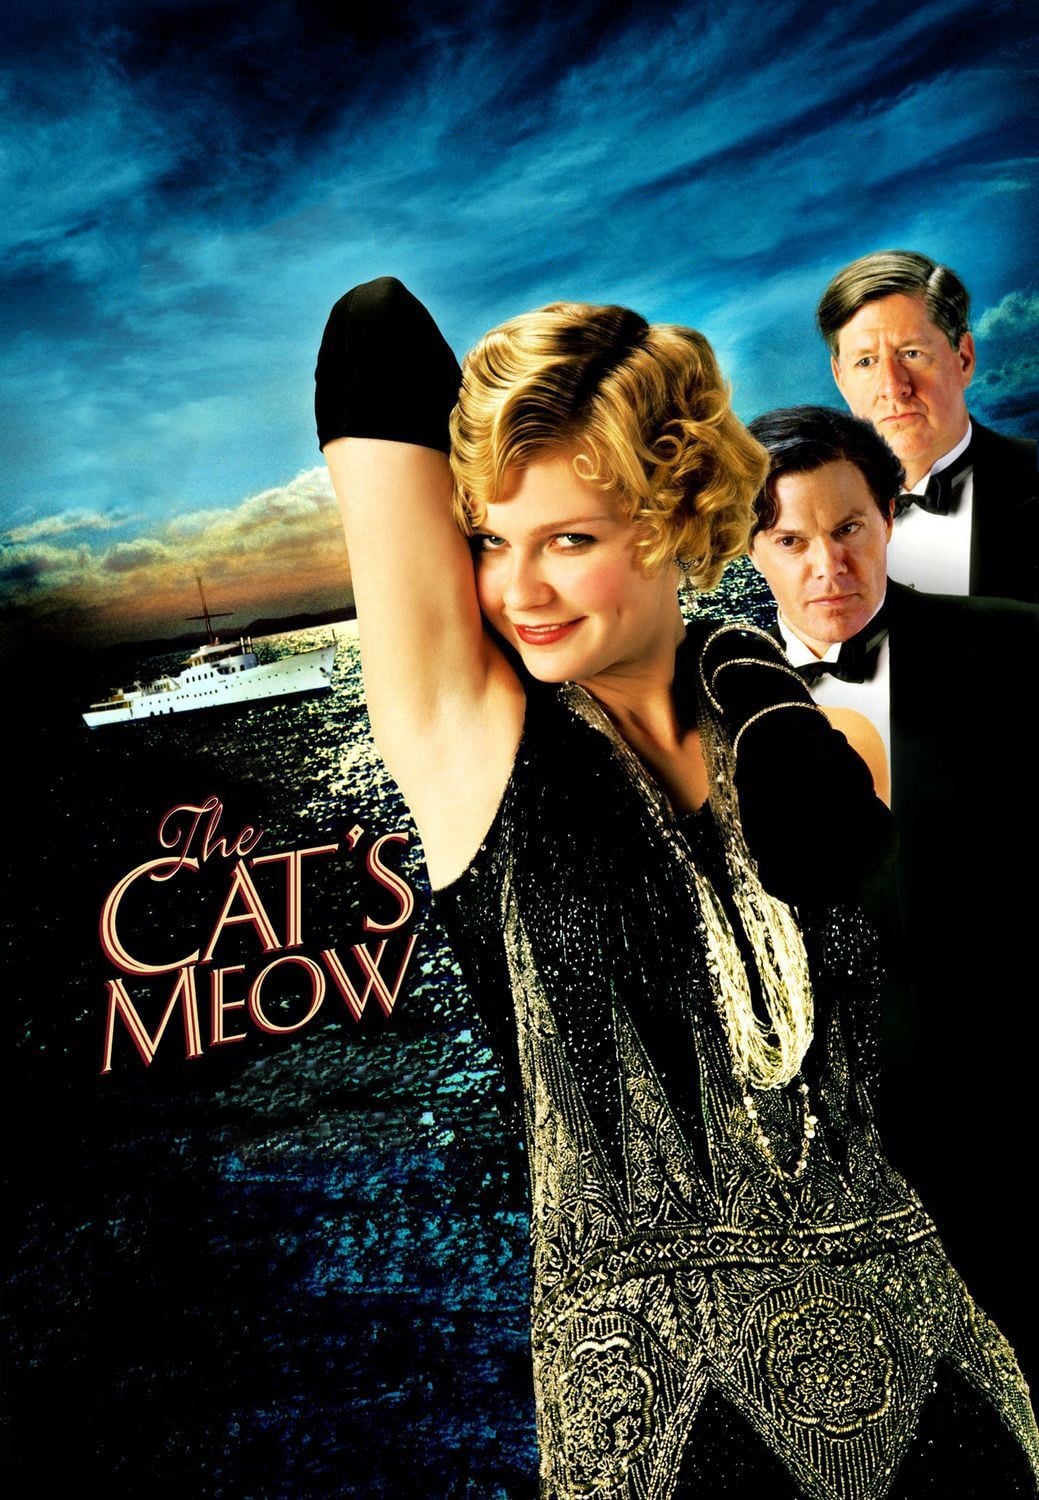 Plakat von "The Cat's Meow"